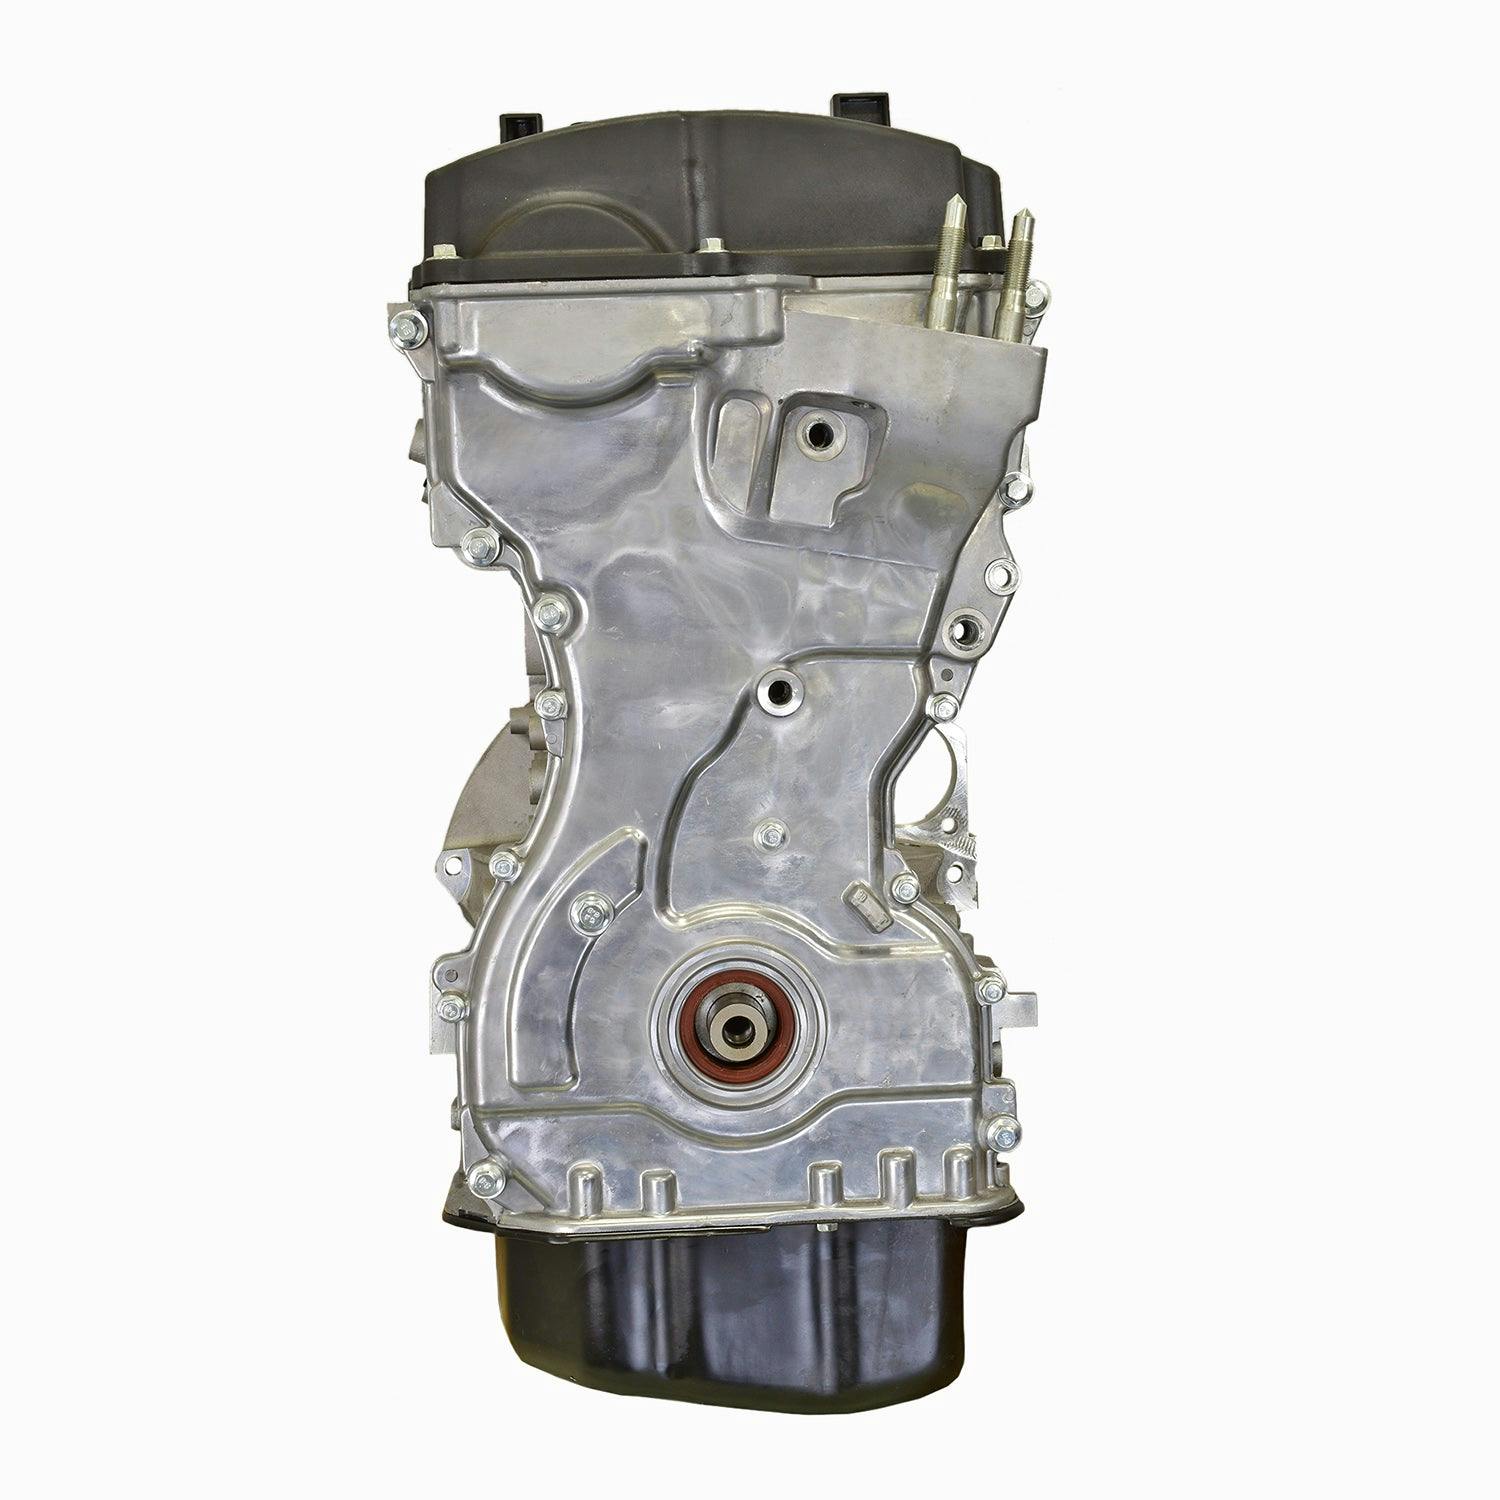 2L Inline-4 Engine for 2013-2016 Hyundai Santa Fe Sport/Kia Sportage